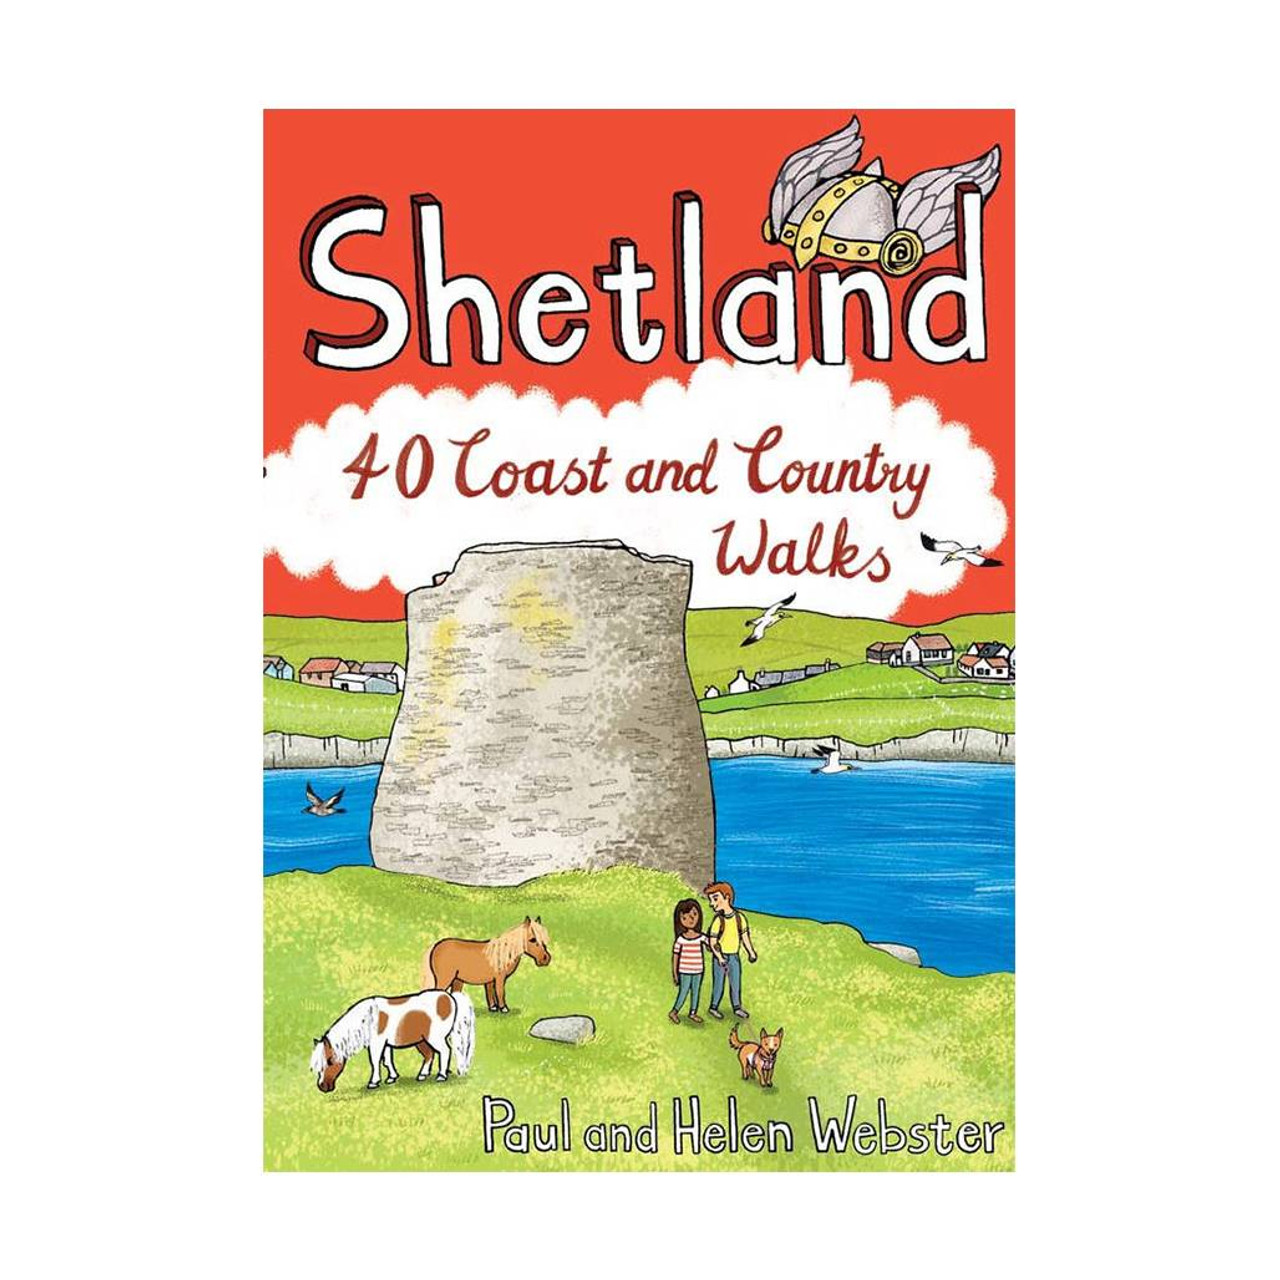 Shetland: 40 CoastandCountry Walks